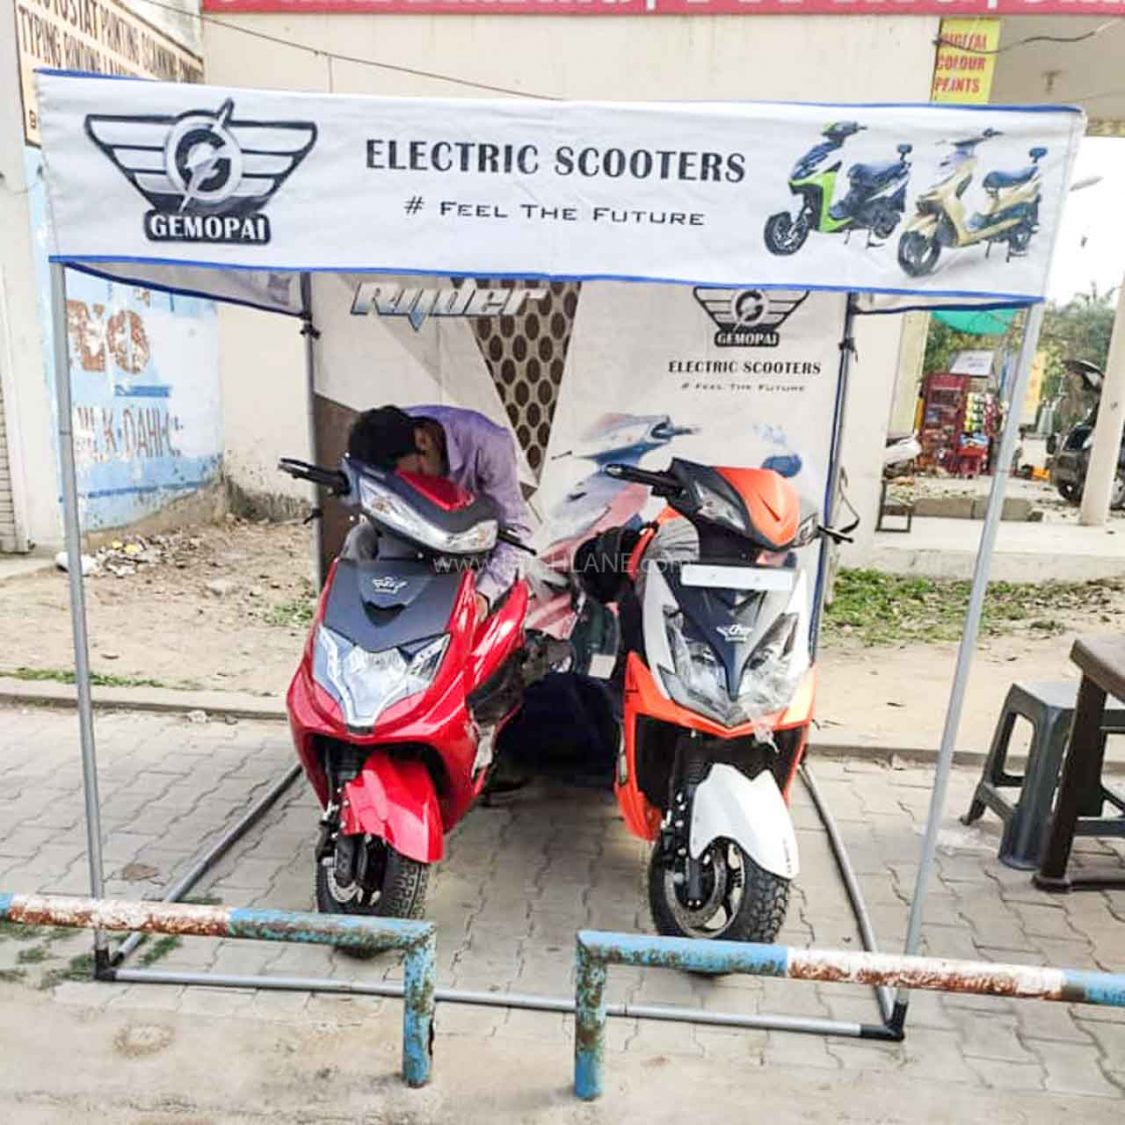 Gemopai electric scooter